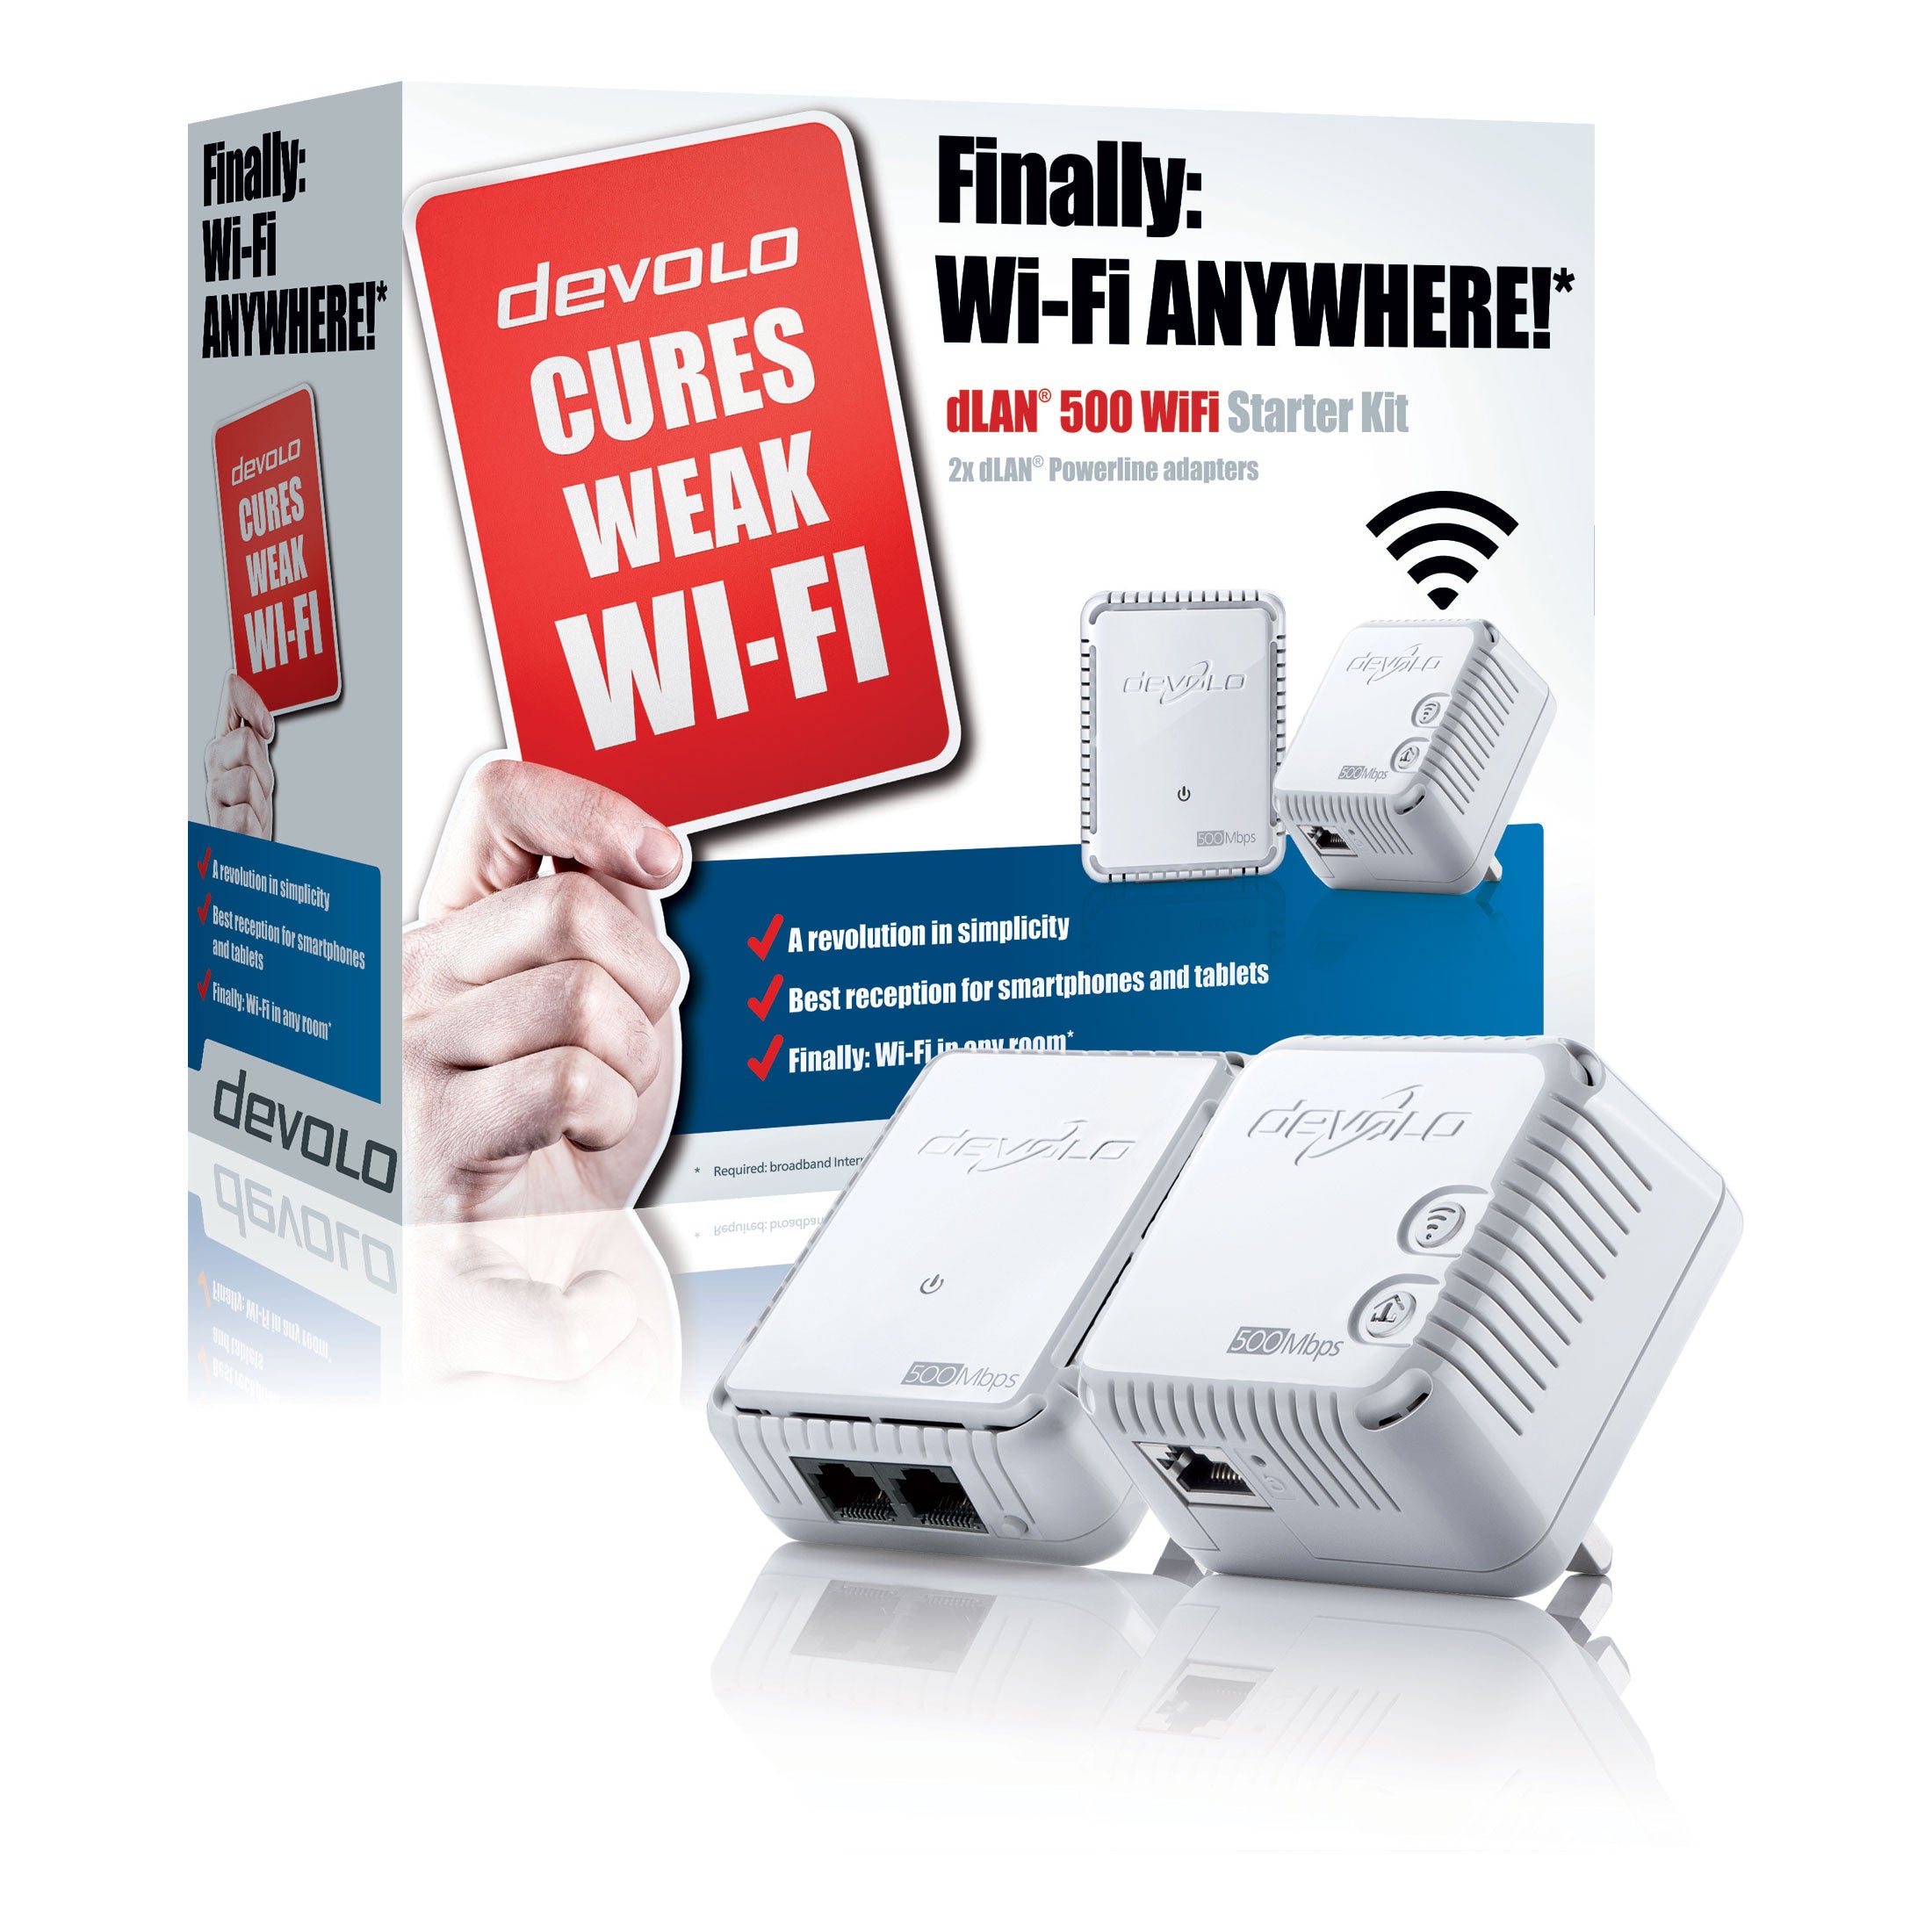 Devolo 1200Mbps + Wifi AC Add-On Powerline Adapter for sale online